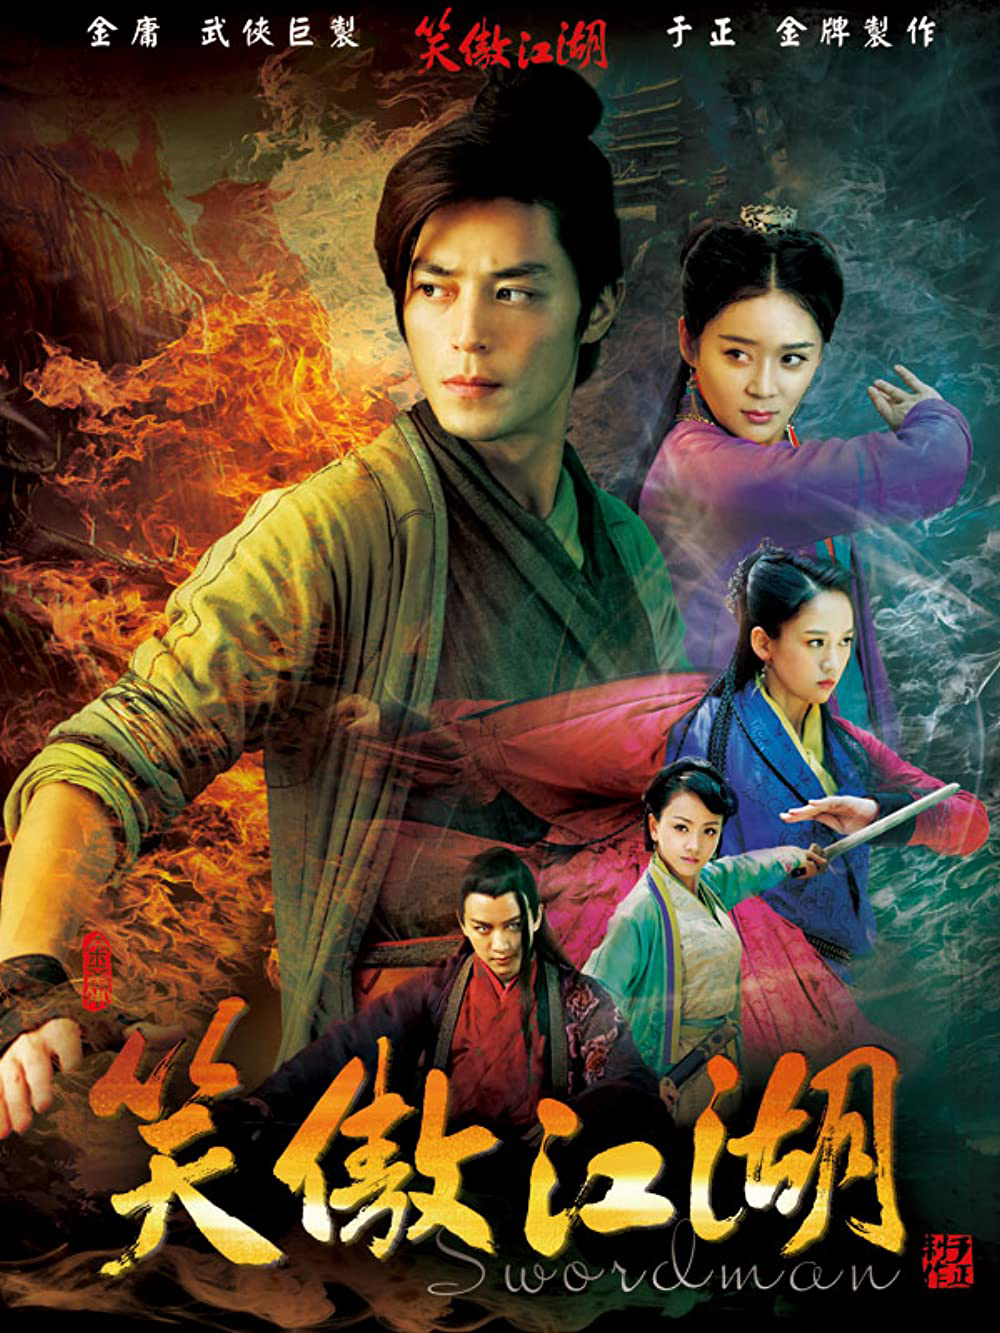 Poster Phim Tân Tiếu Ngạo Giang Hồ (Swordsman)